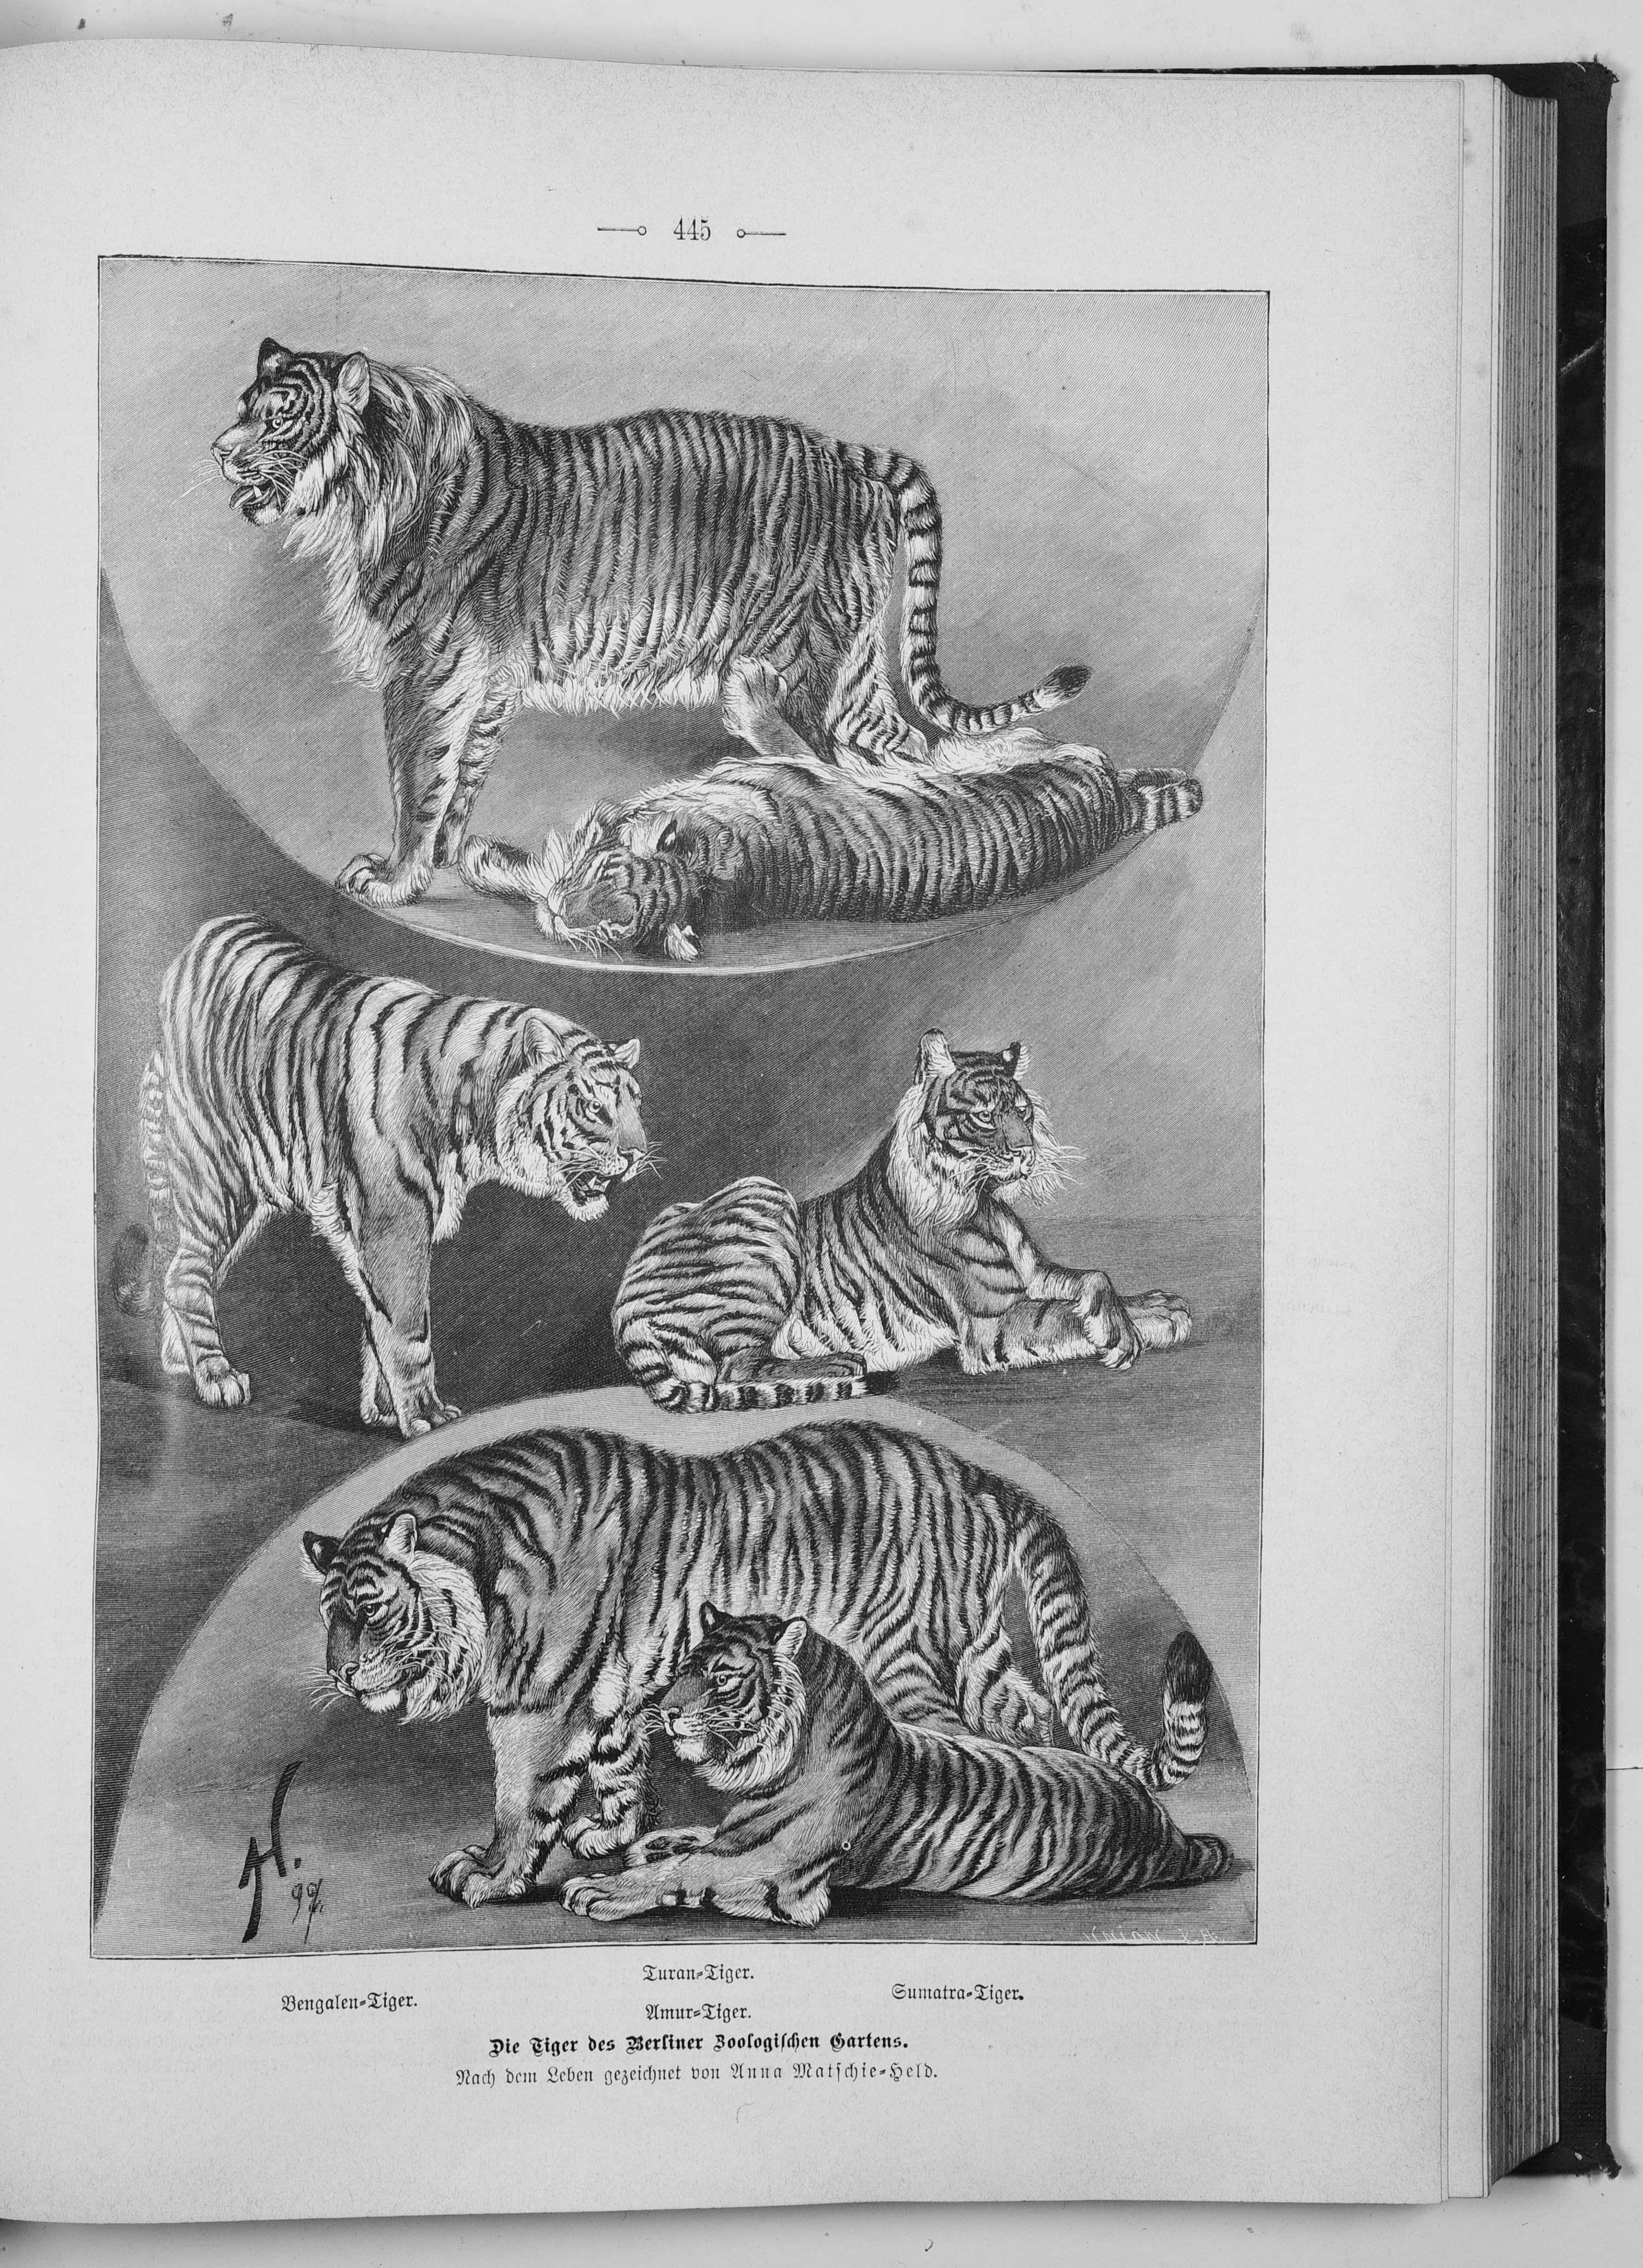 Siberian tiger, Size, Habitat, Population, & Facts